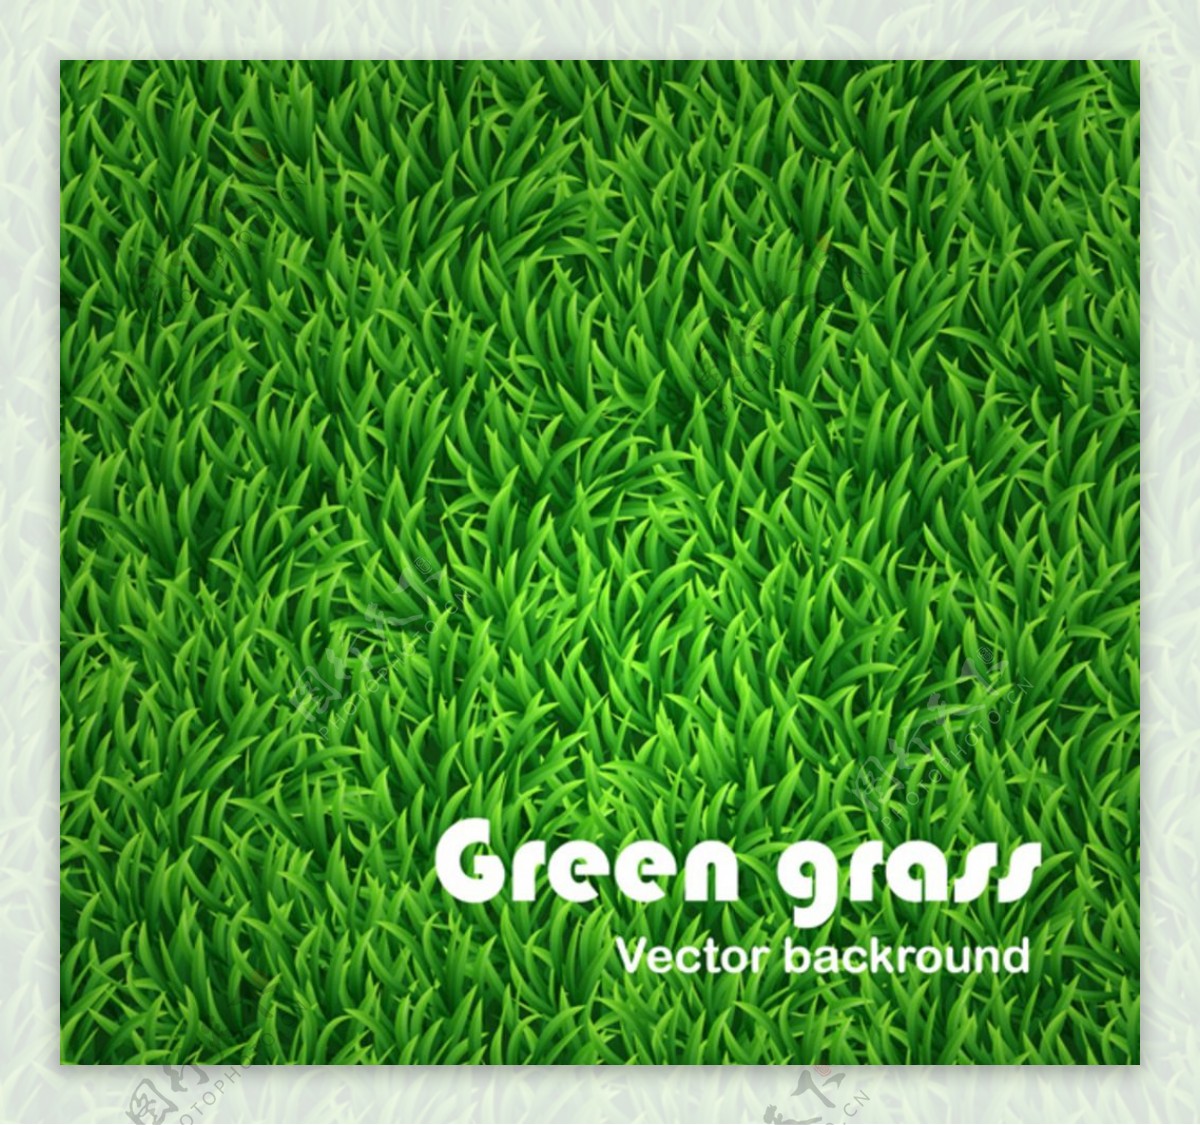 Grass草图片